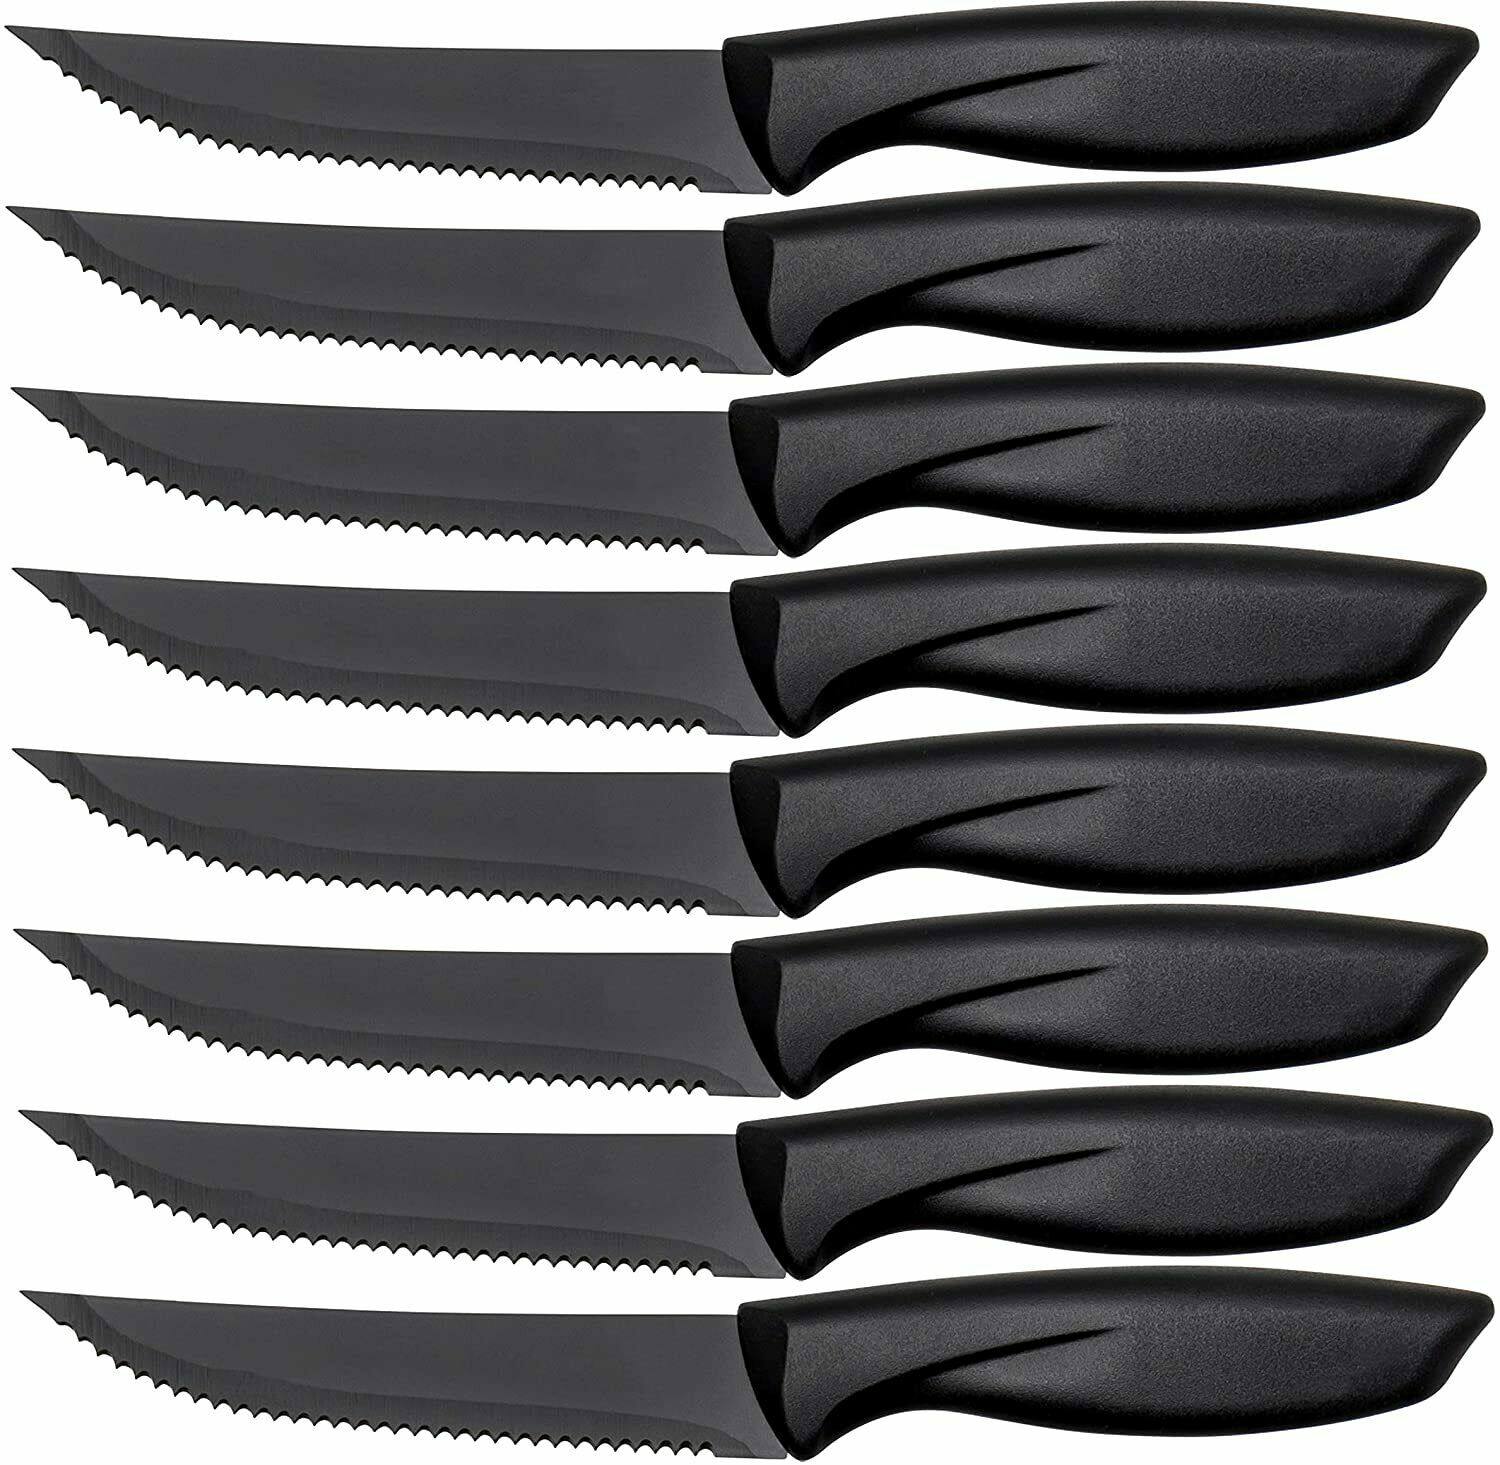 Steak Knives, 8 Pieces Steak Knife Set with Sharp Serrated Blade 